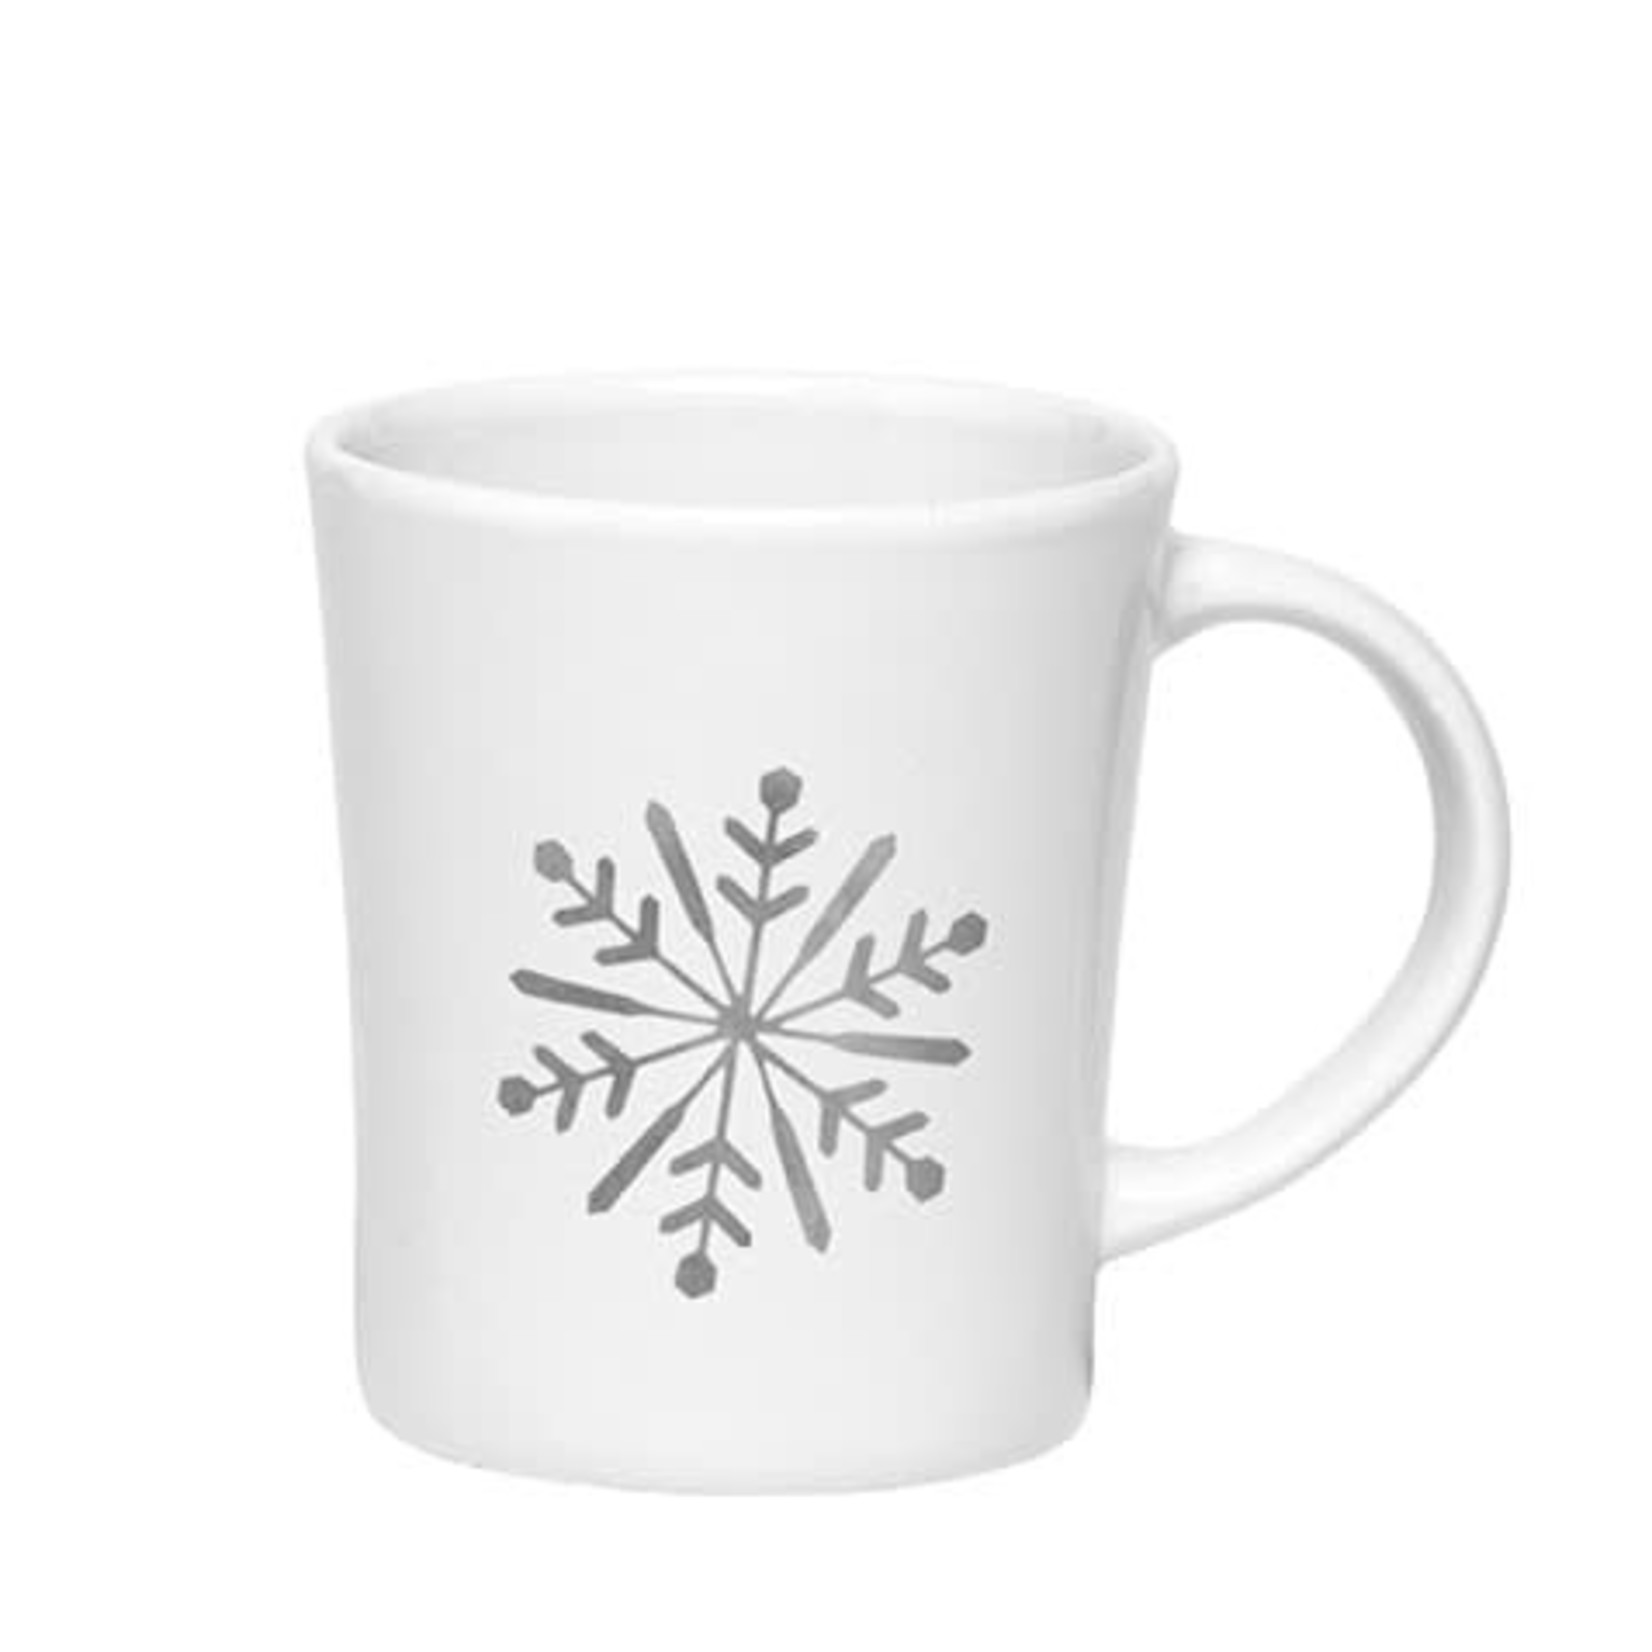 HARMAN HARMAN Snowflake Mug - Silver DNR